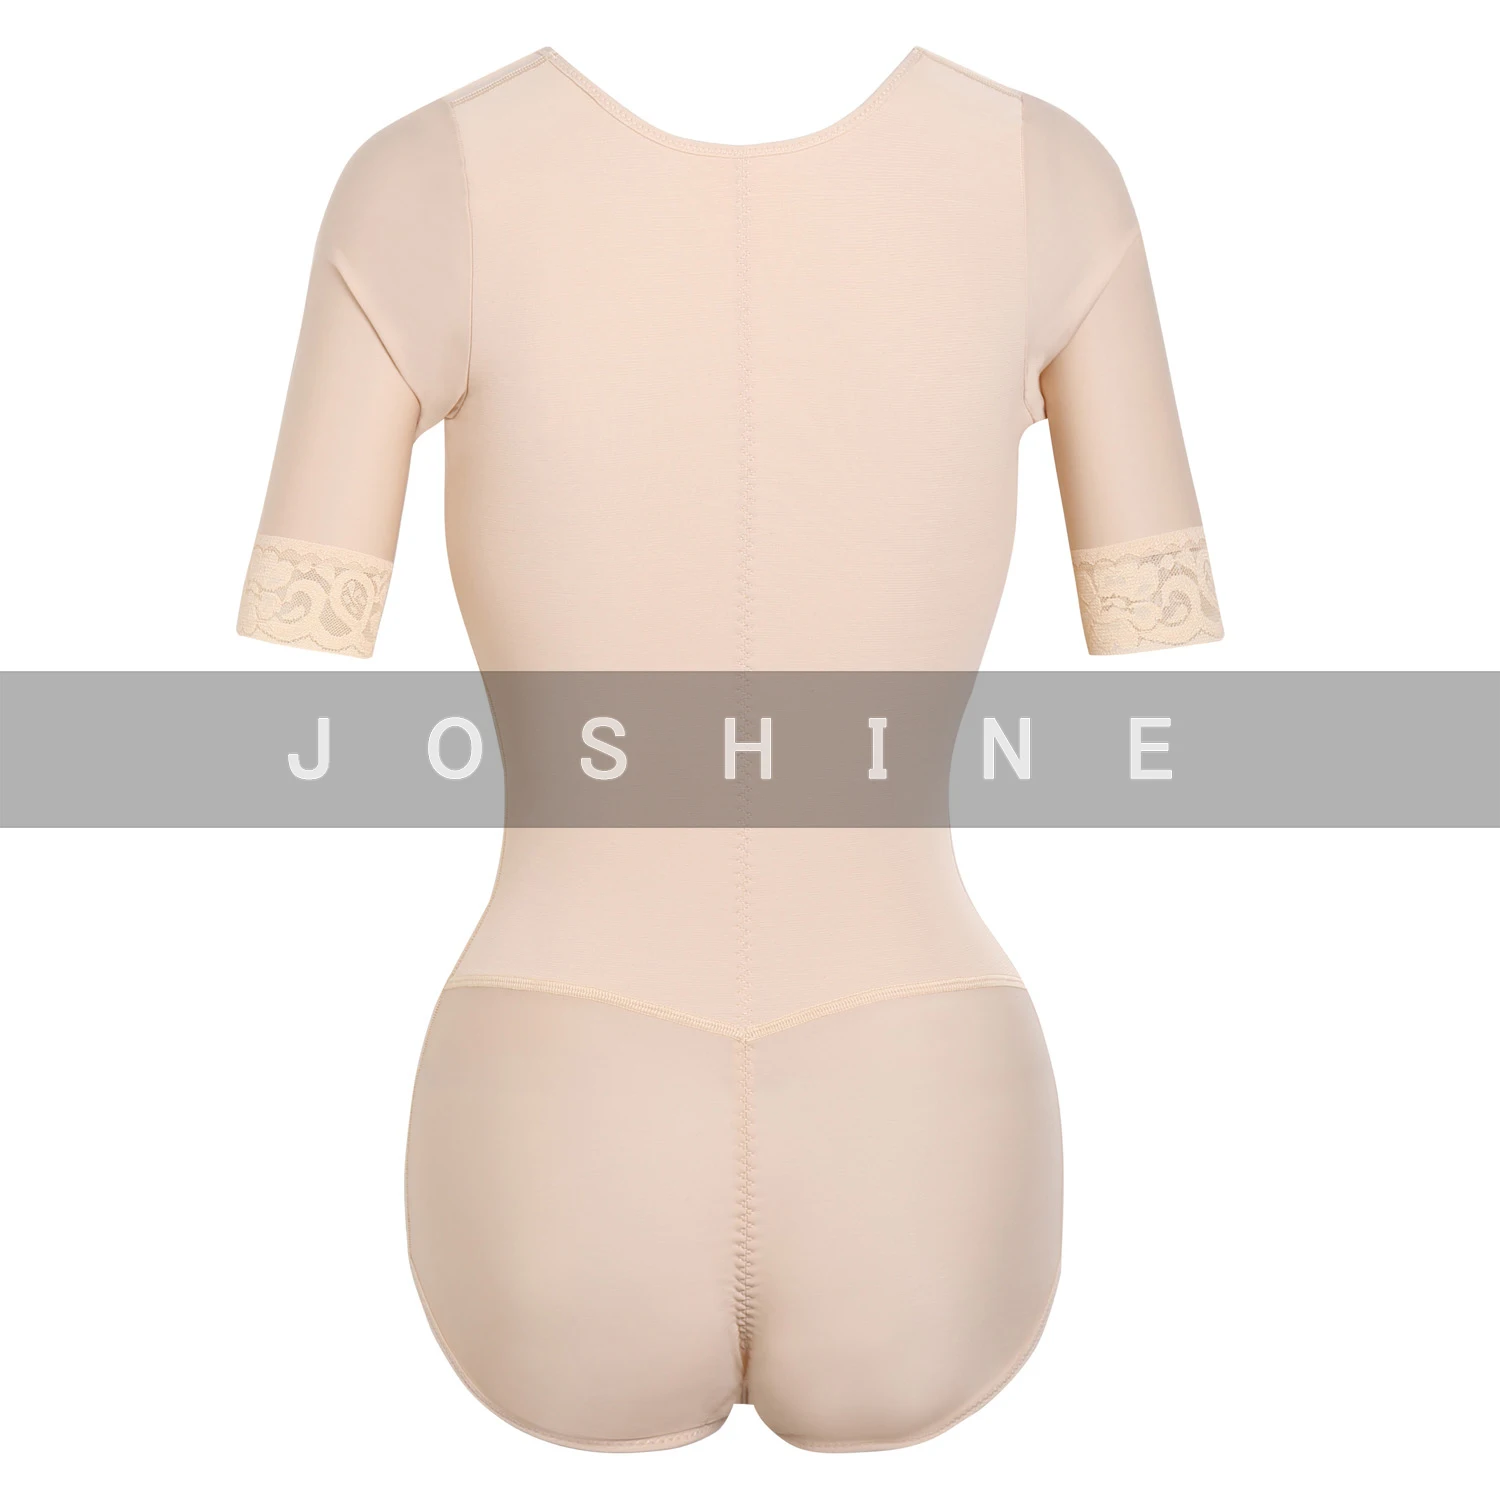 JOSHINE Compression Shorts Faja Shapewear for Women Short